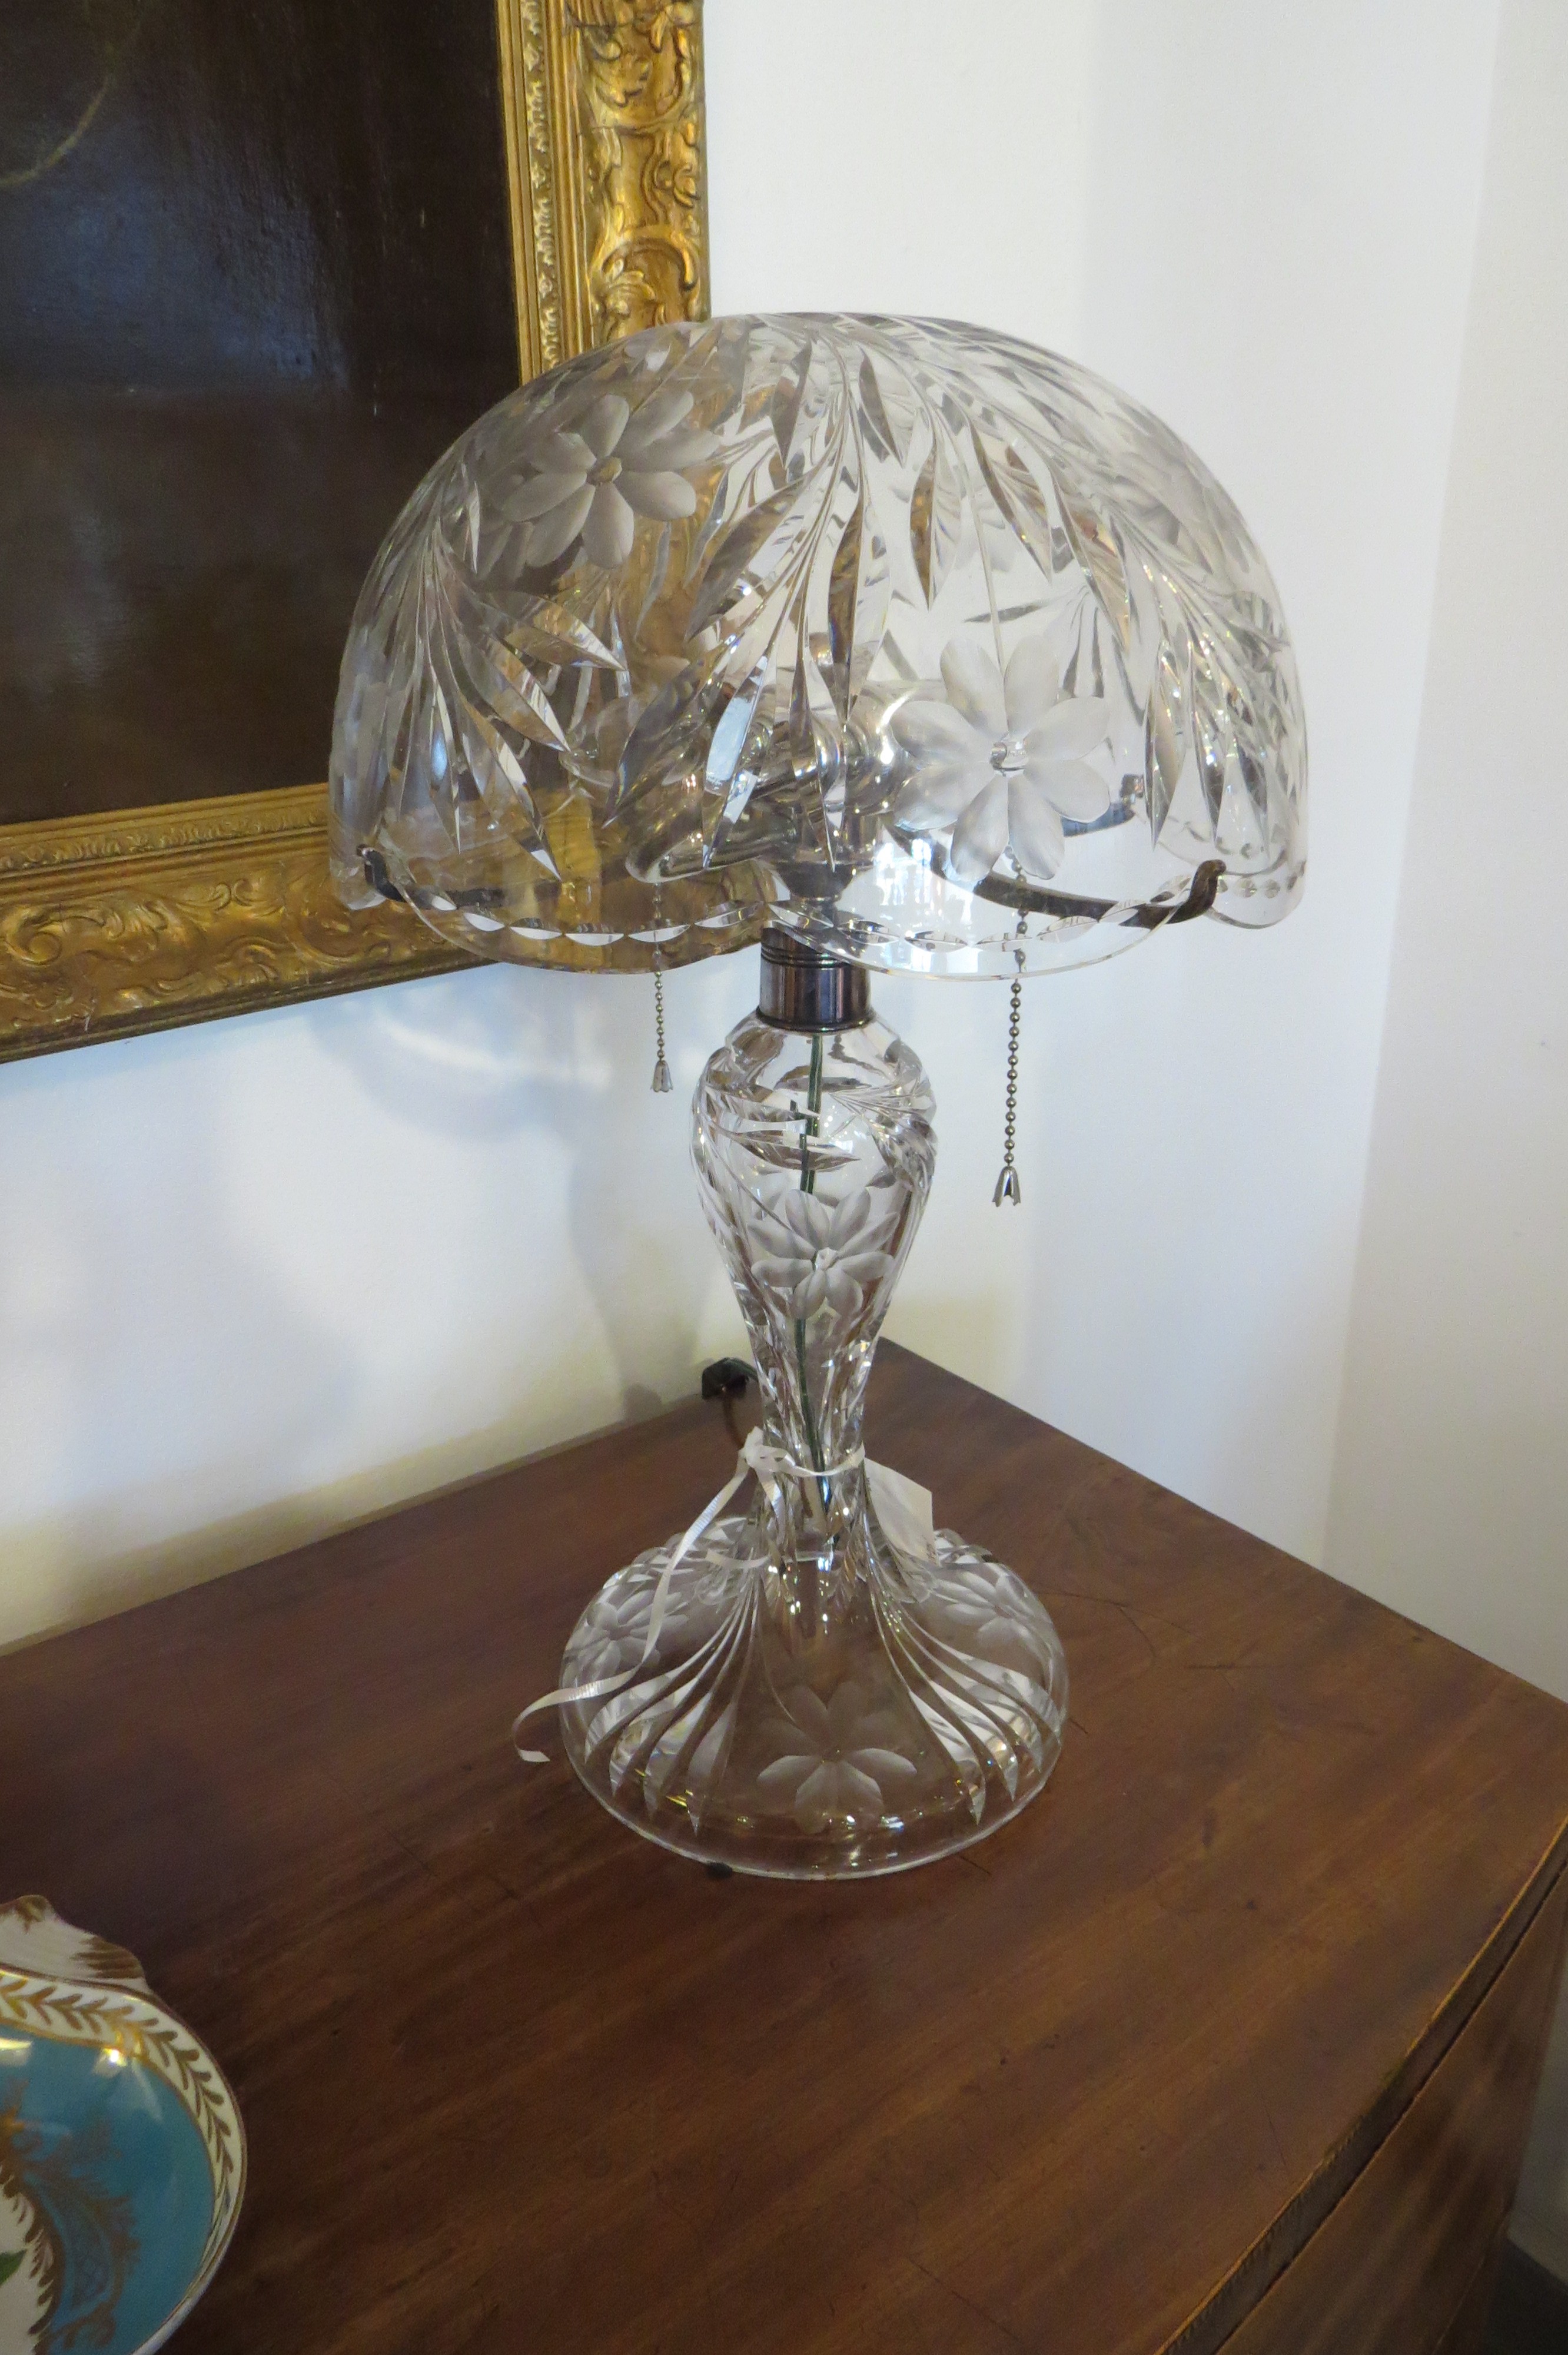 American Brilliant Cut Glass Lamp